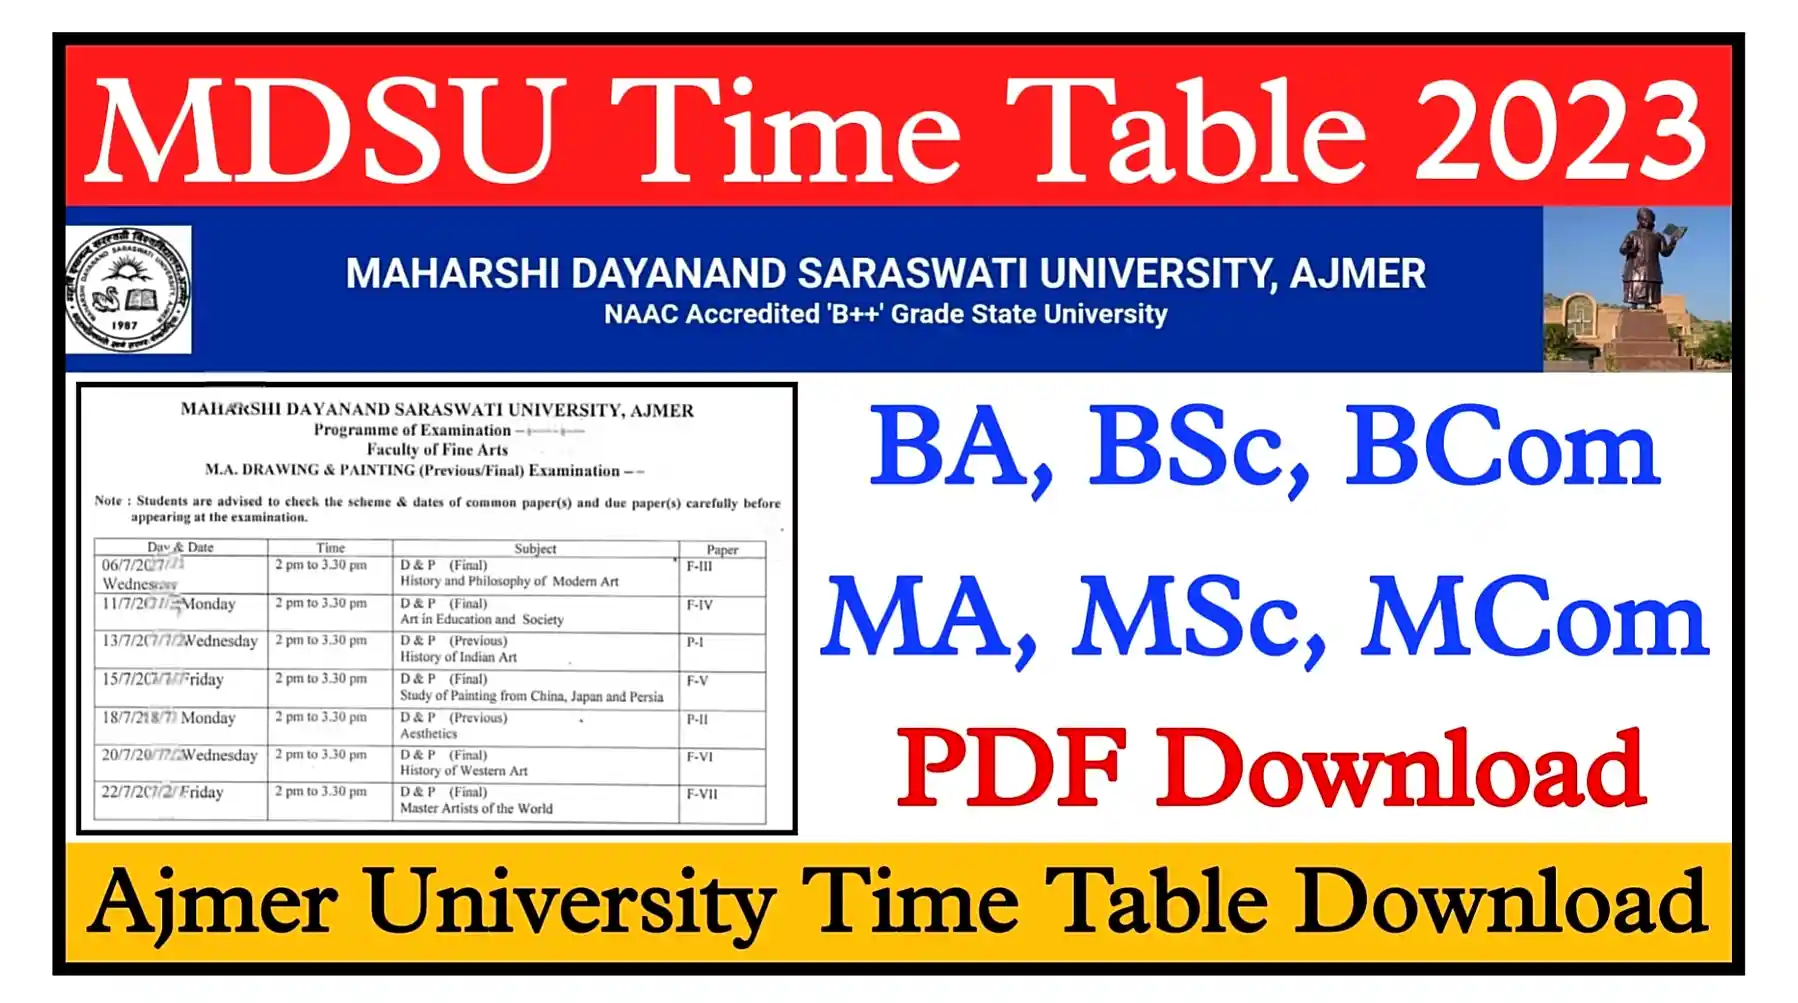 MDSU Time Table 2023 BA, BSc, BCom, MA, MSc, MCom Ajmer University Time Table 2023 PDF Download Link